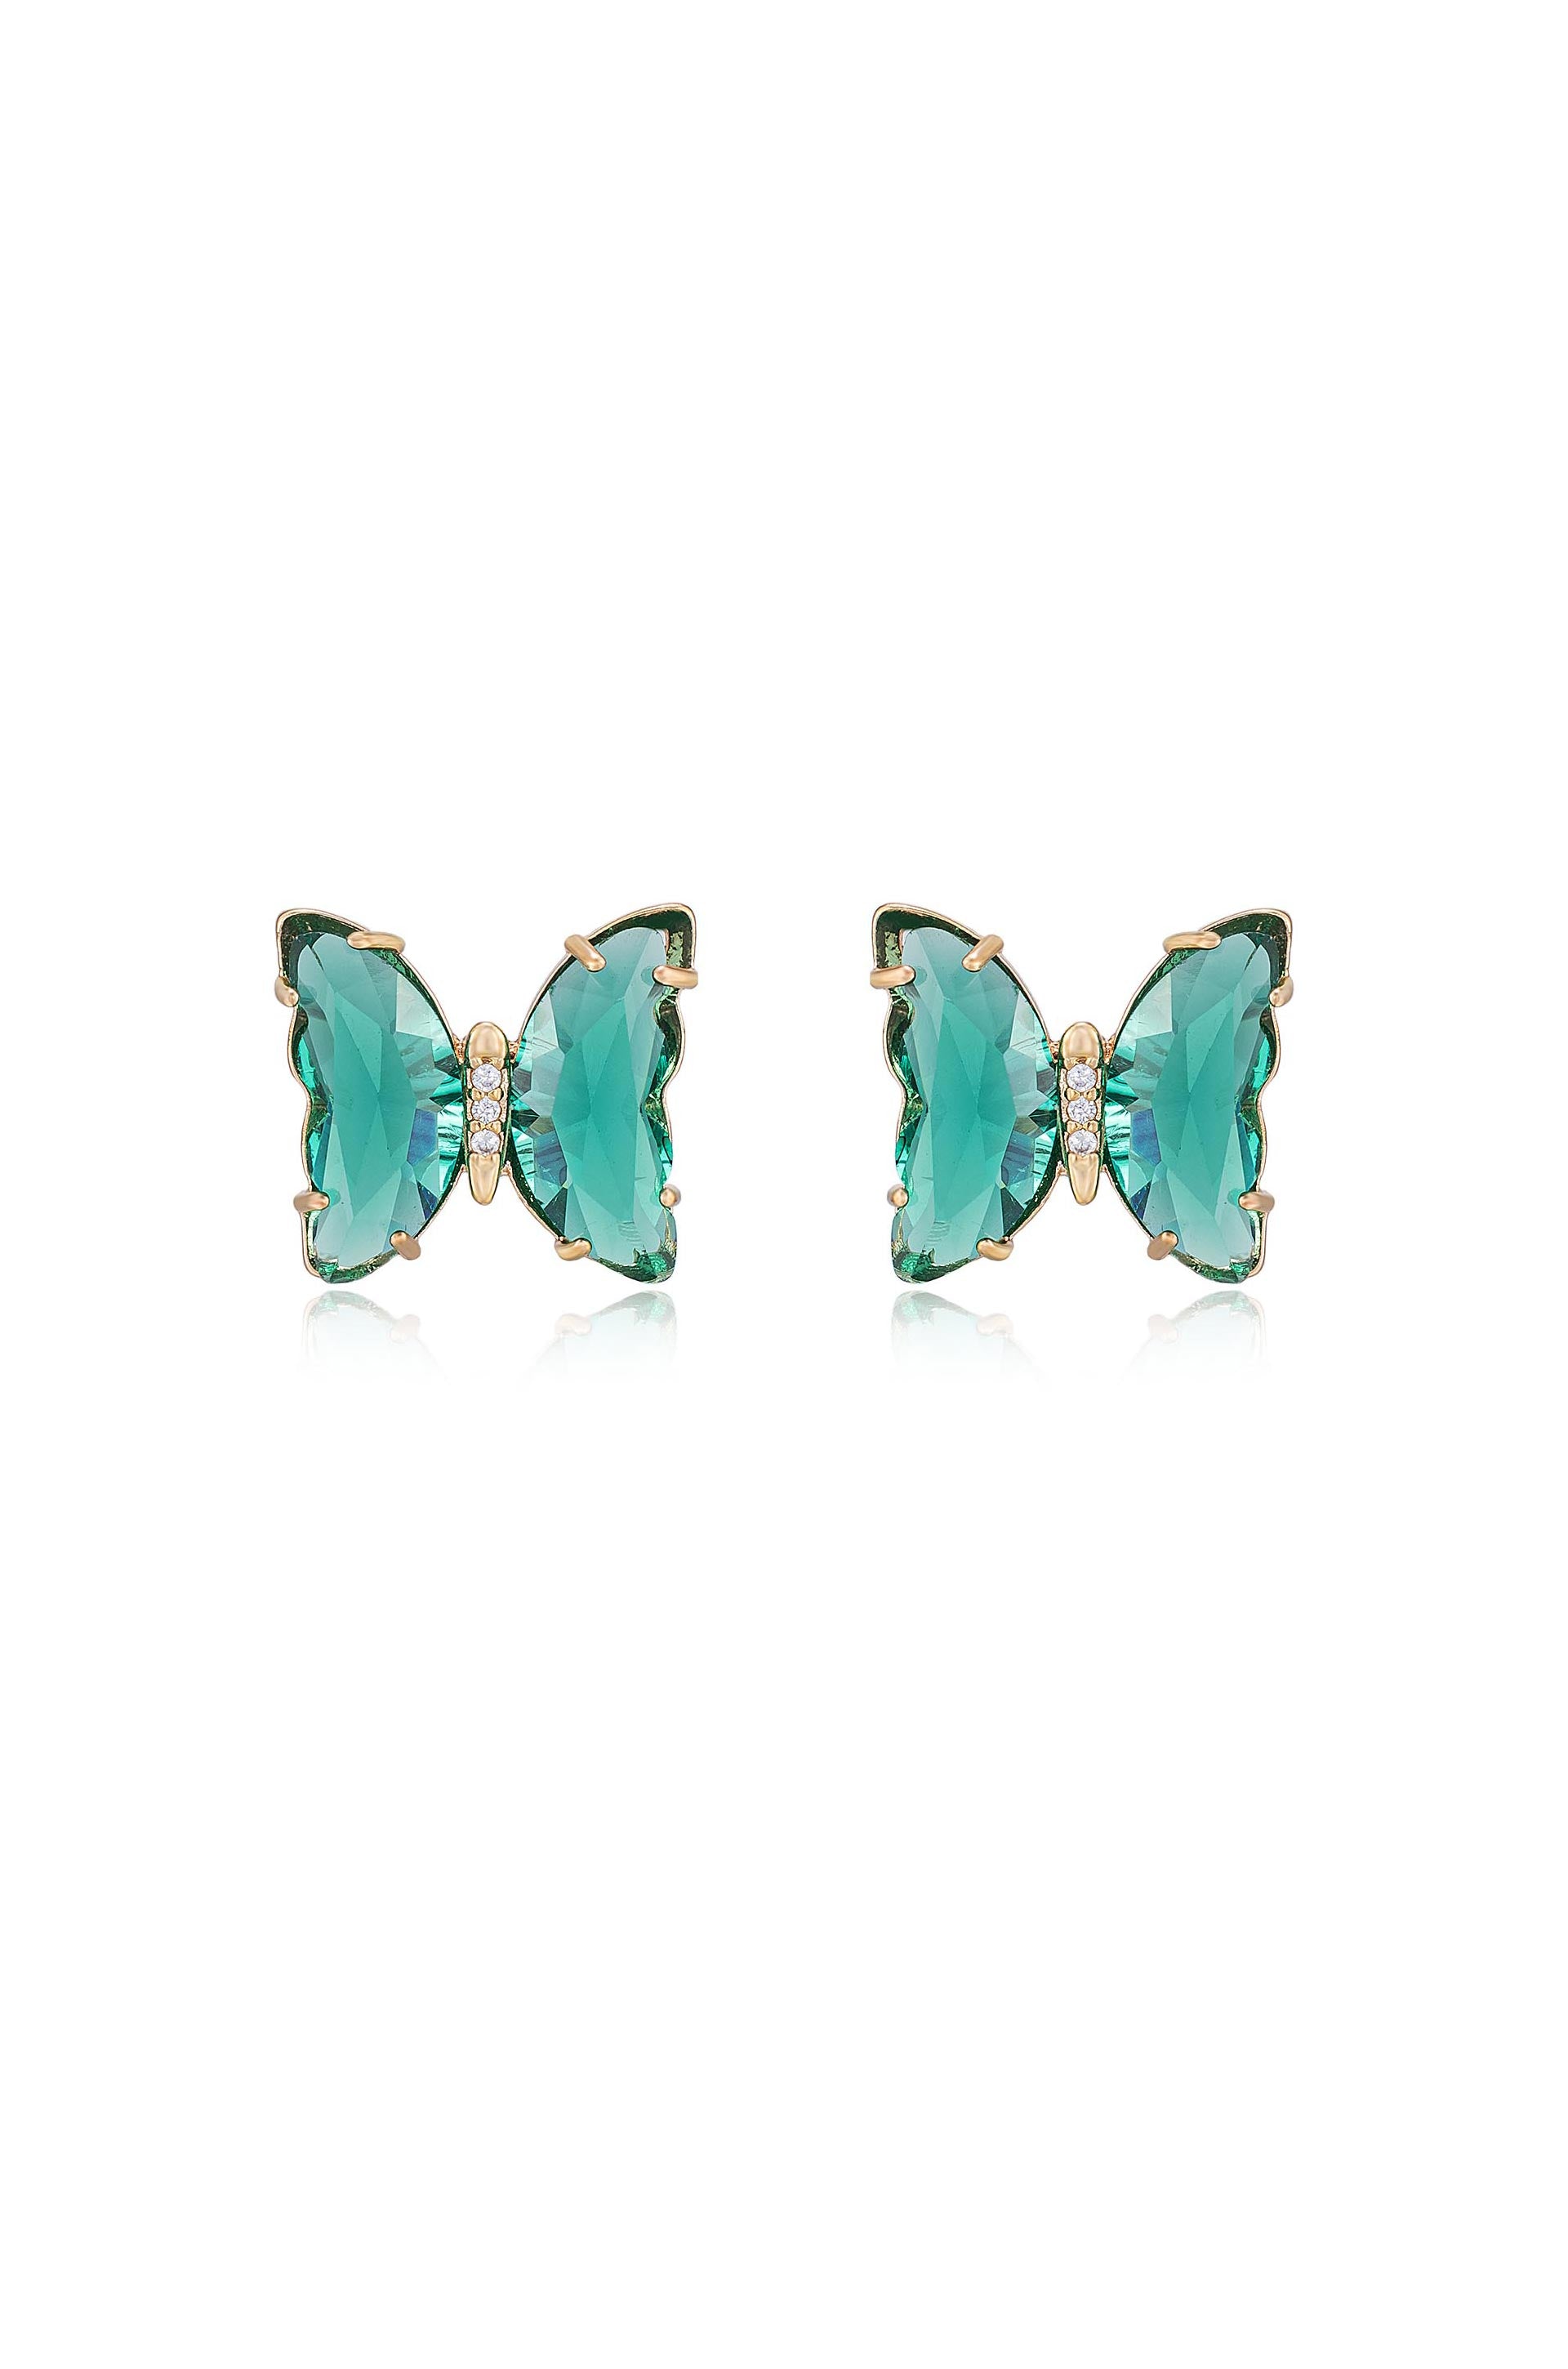 Flutter Away Earrings – Gold Plated Crystal Ettika 18k